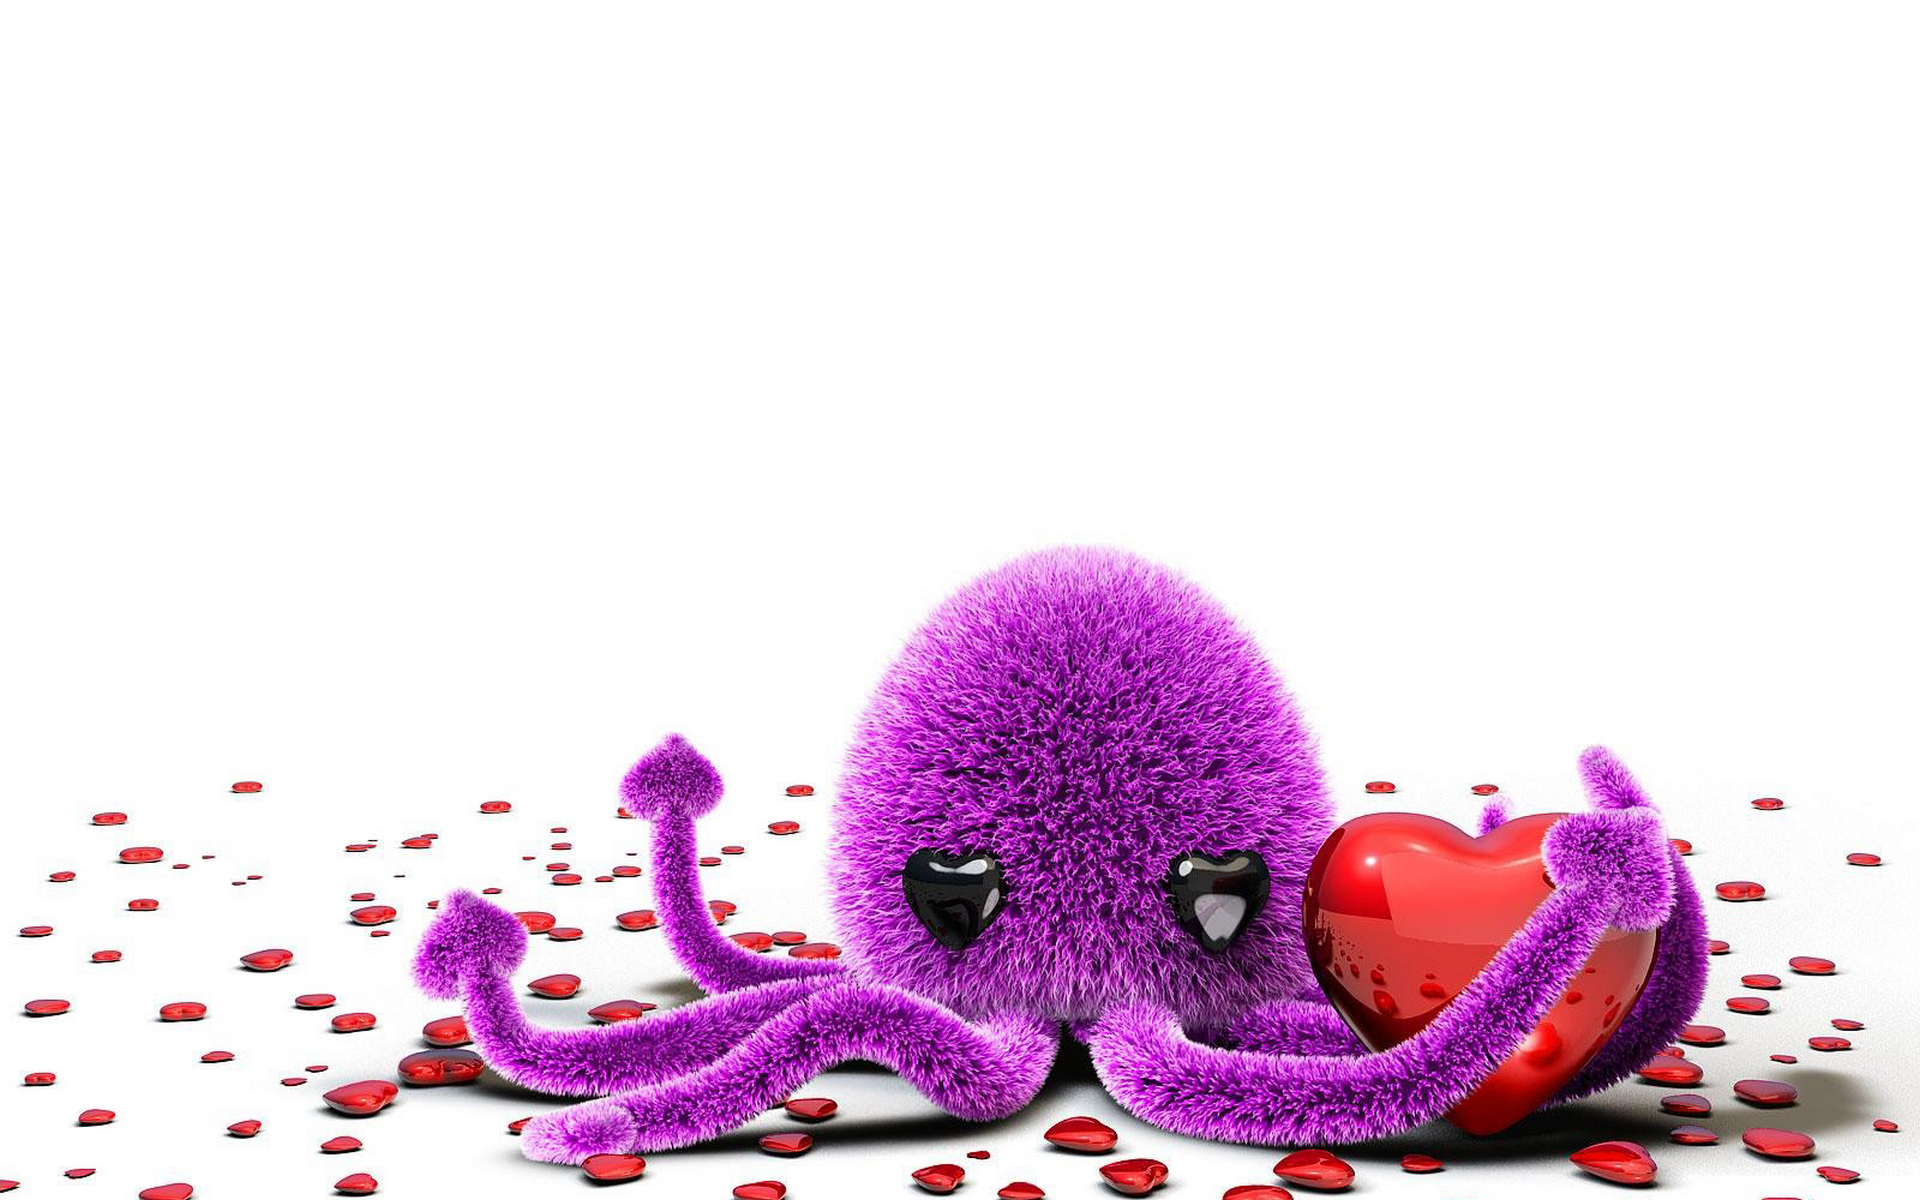 Wallpapers toy octopus purple on the desktop